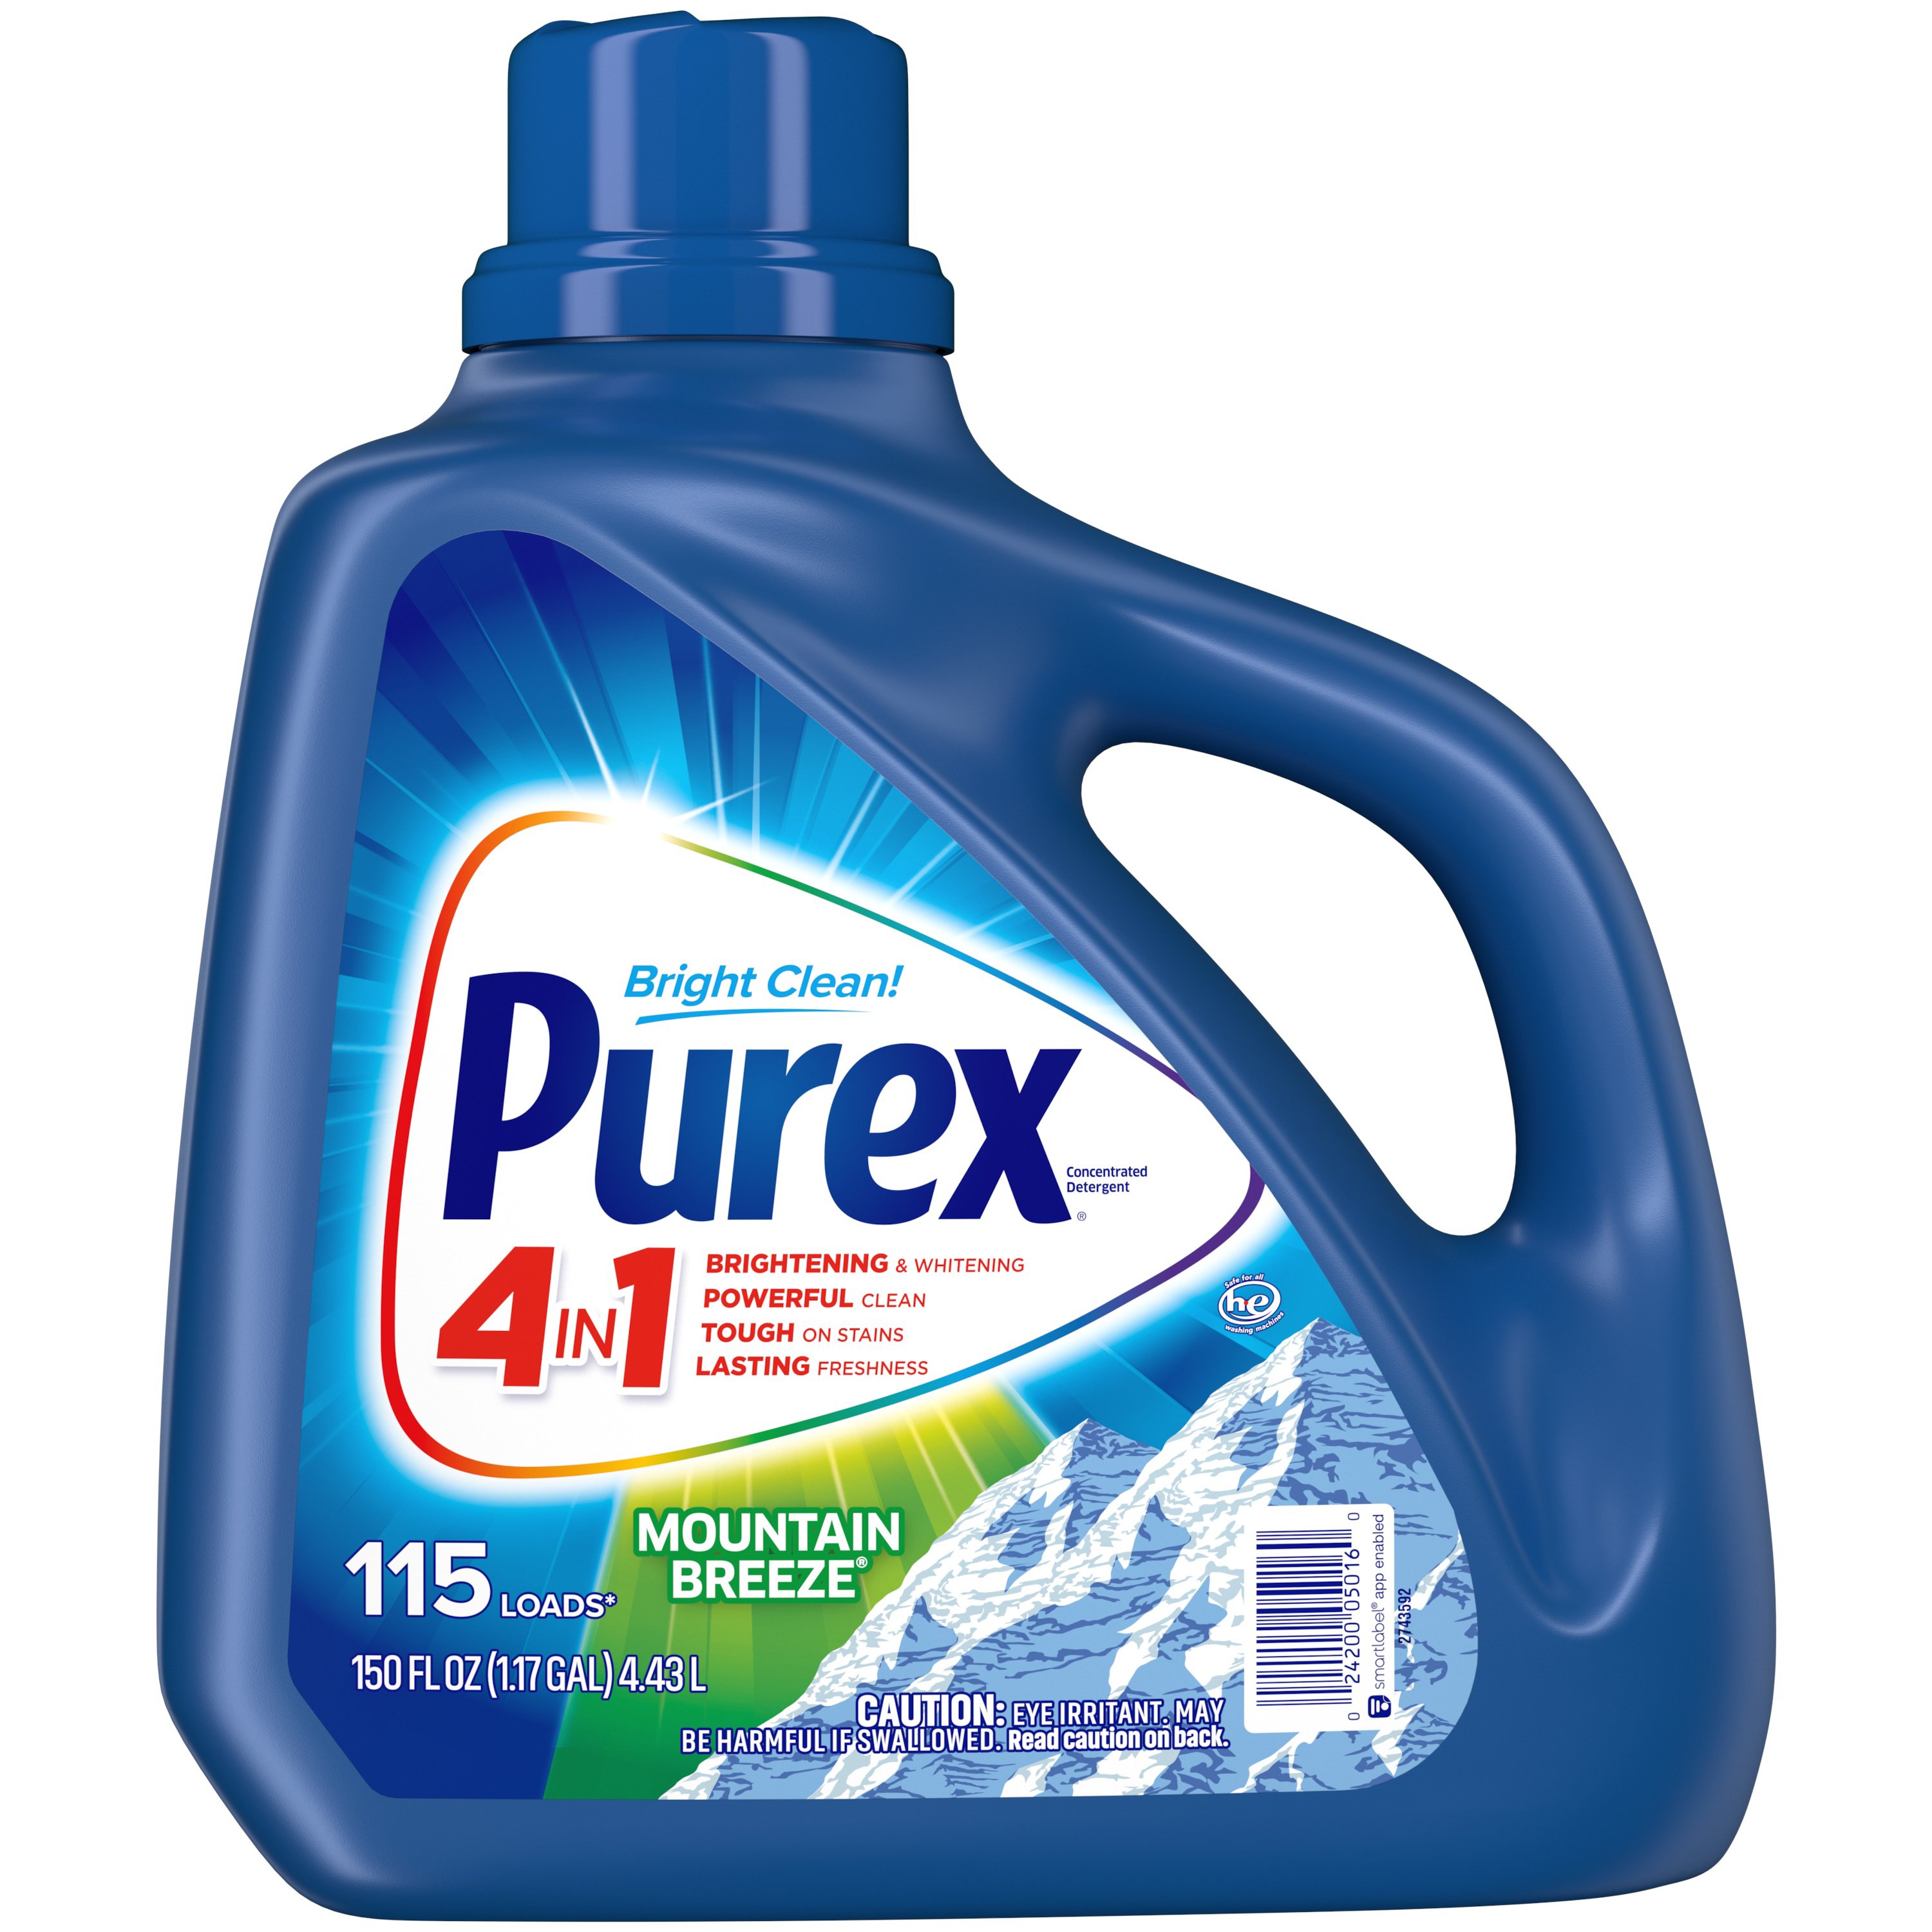 purex-mountain-breeze-he-liquid-laundry-detergent-115-loads-shop